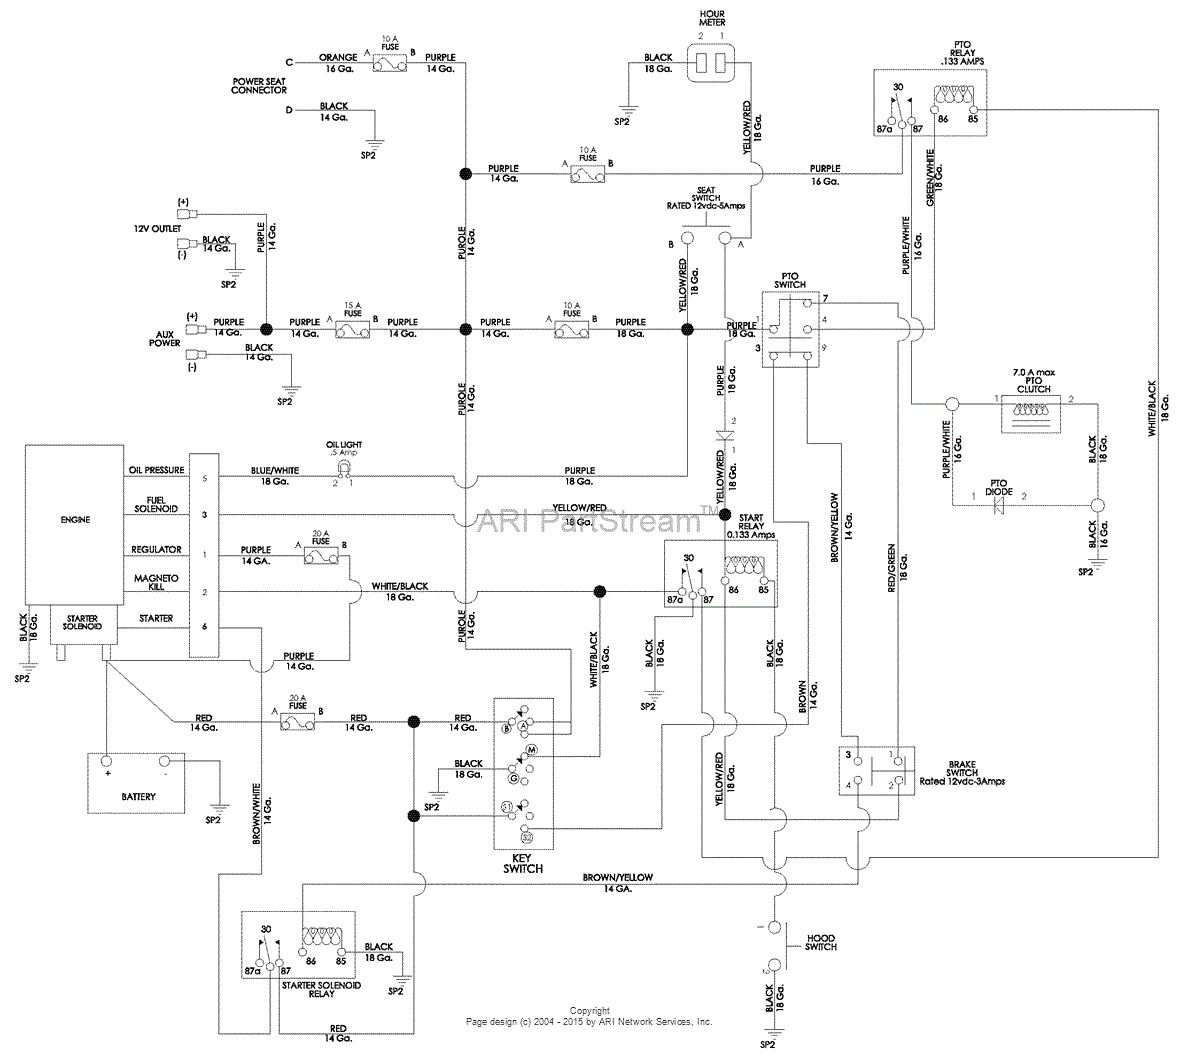 Wiring Diagram For Poulan Lawn Mower